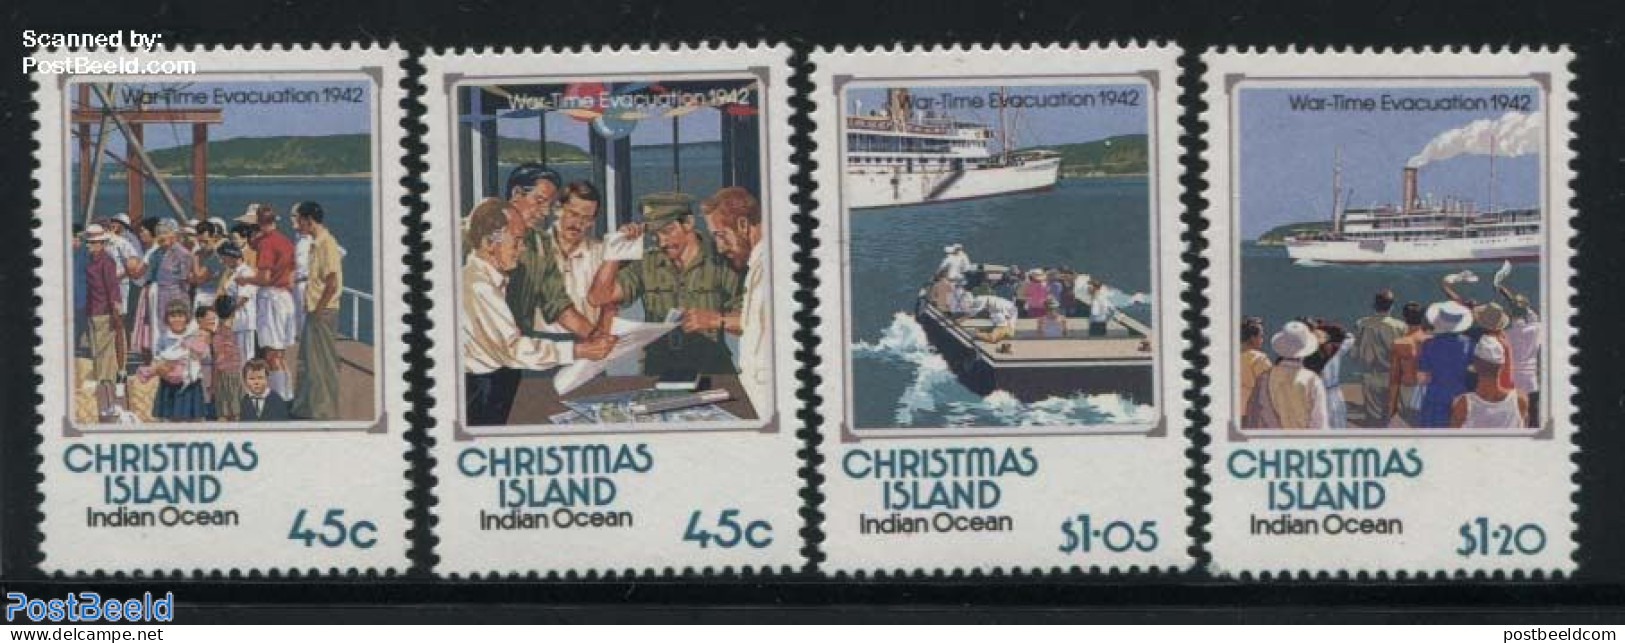 Christmas Islands 1992 War Time Evacuation 4v, Mint NH, Transport - Ships And Boats - Ships